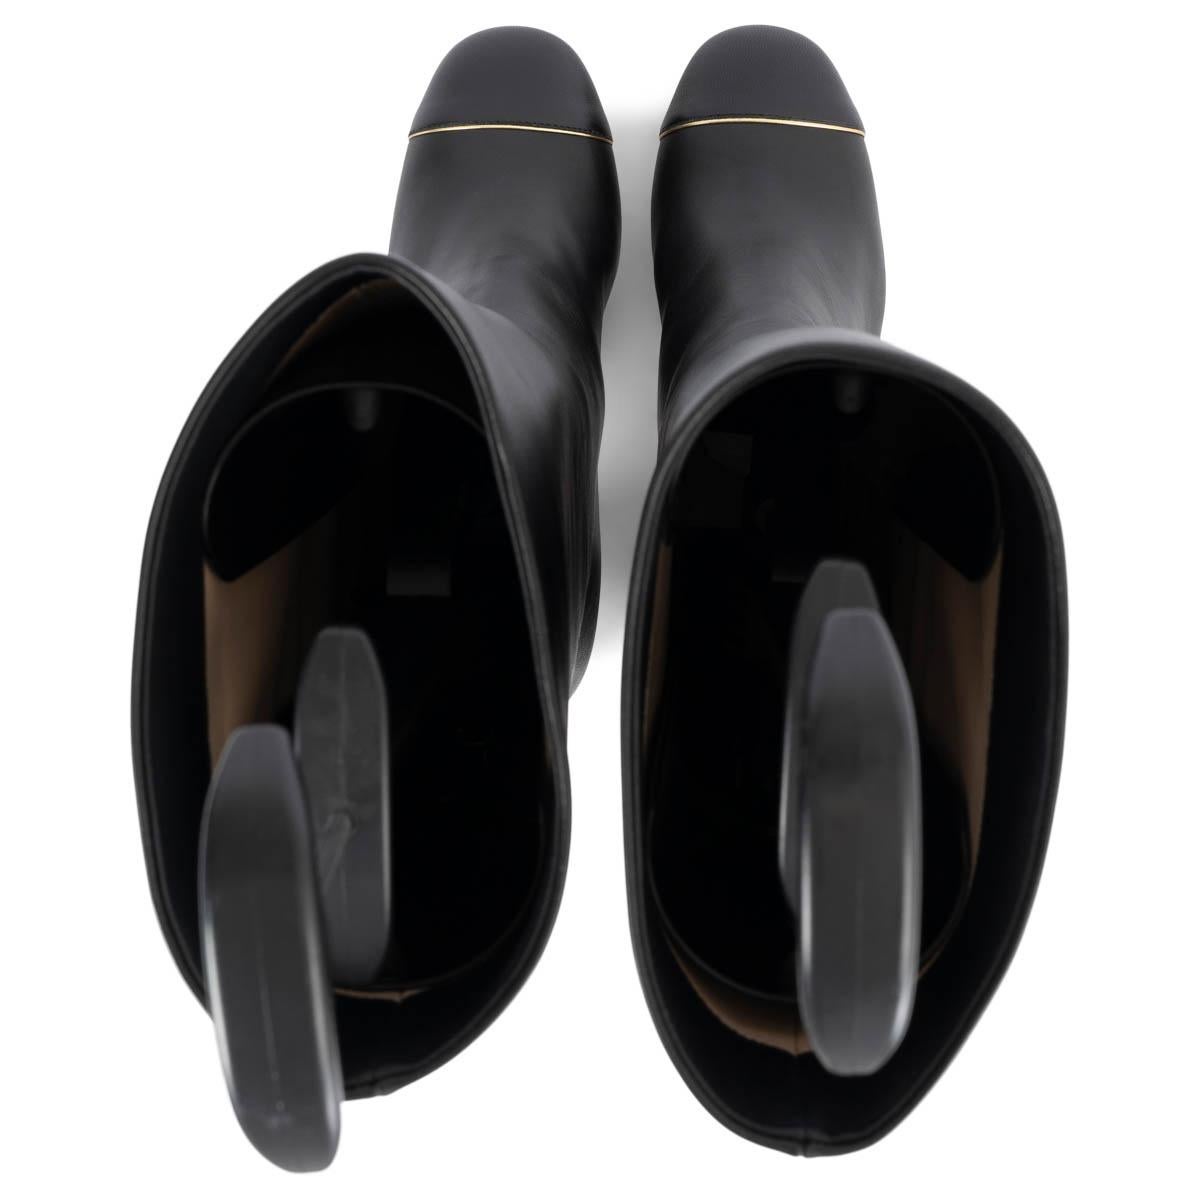 Women's CHANEL black leather METAL TRIM BLOCK HEEL Knee High Boots Shoes 38